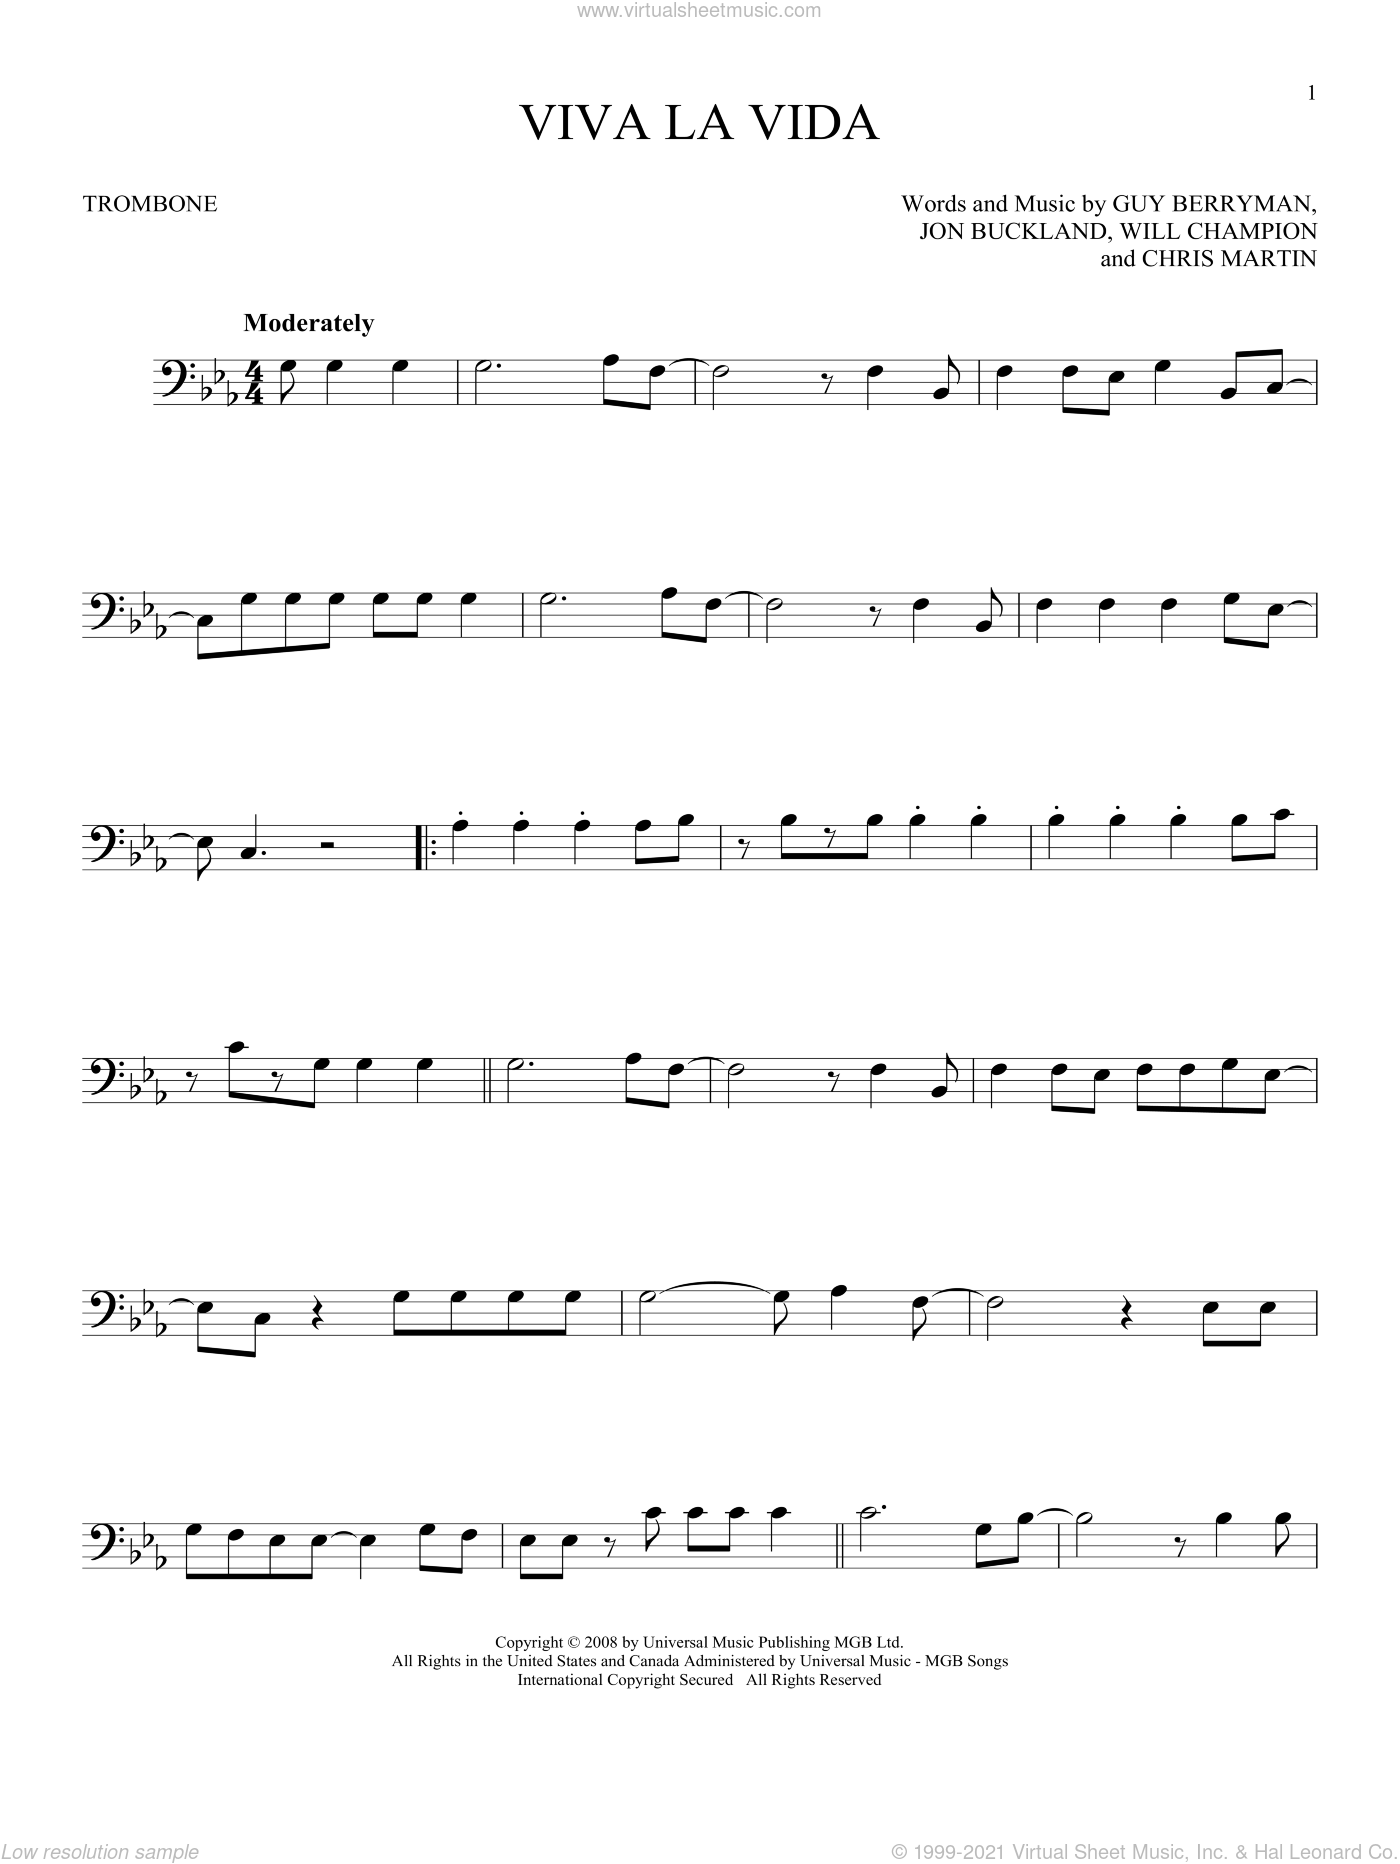 Coldplay - Viva La Vida sheet music for trombone solo [PDF]